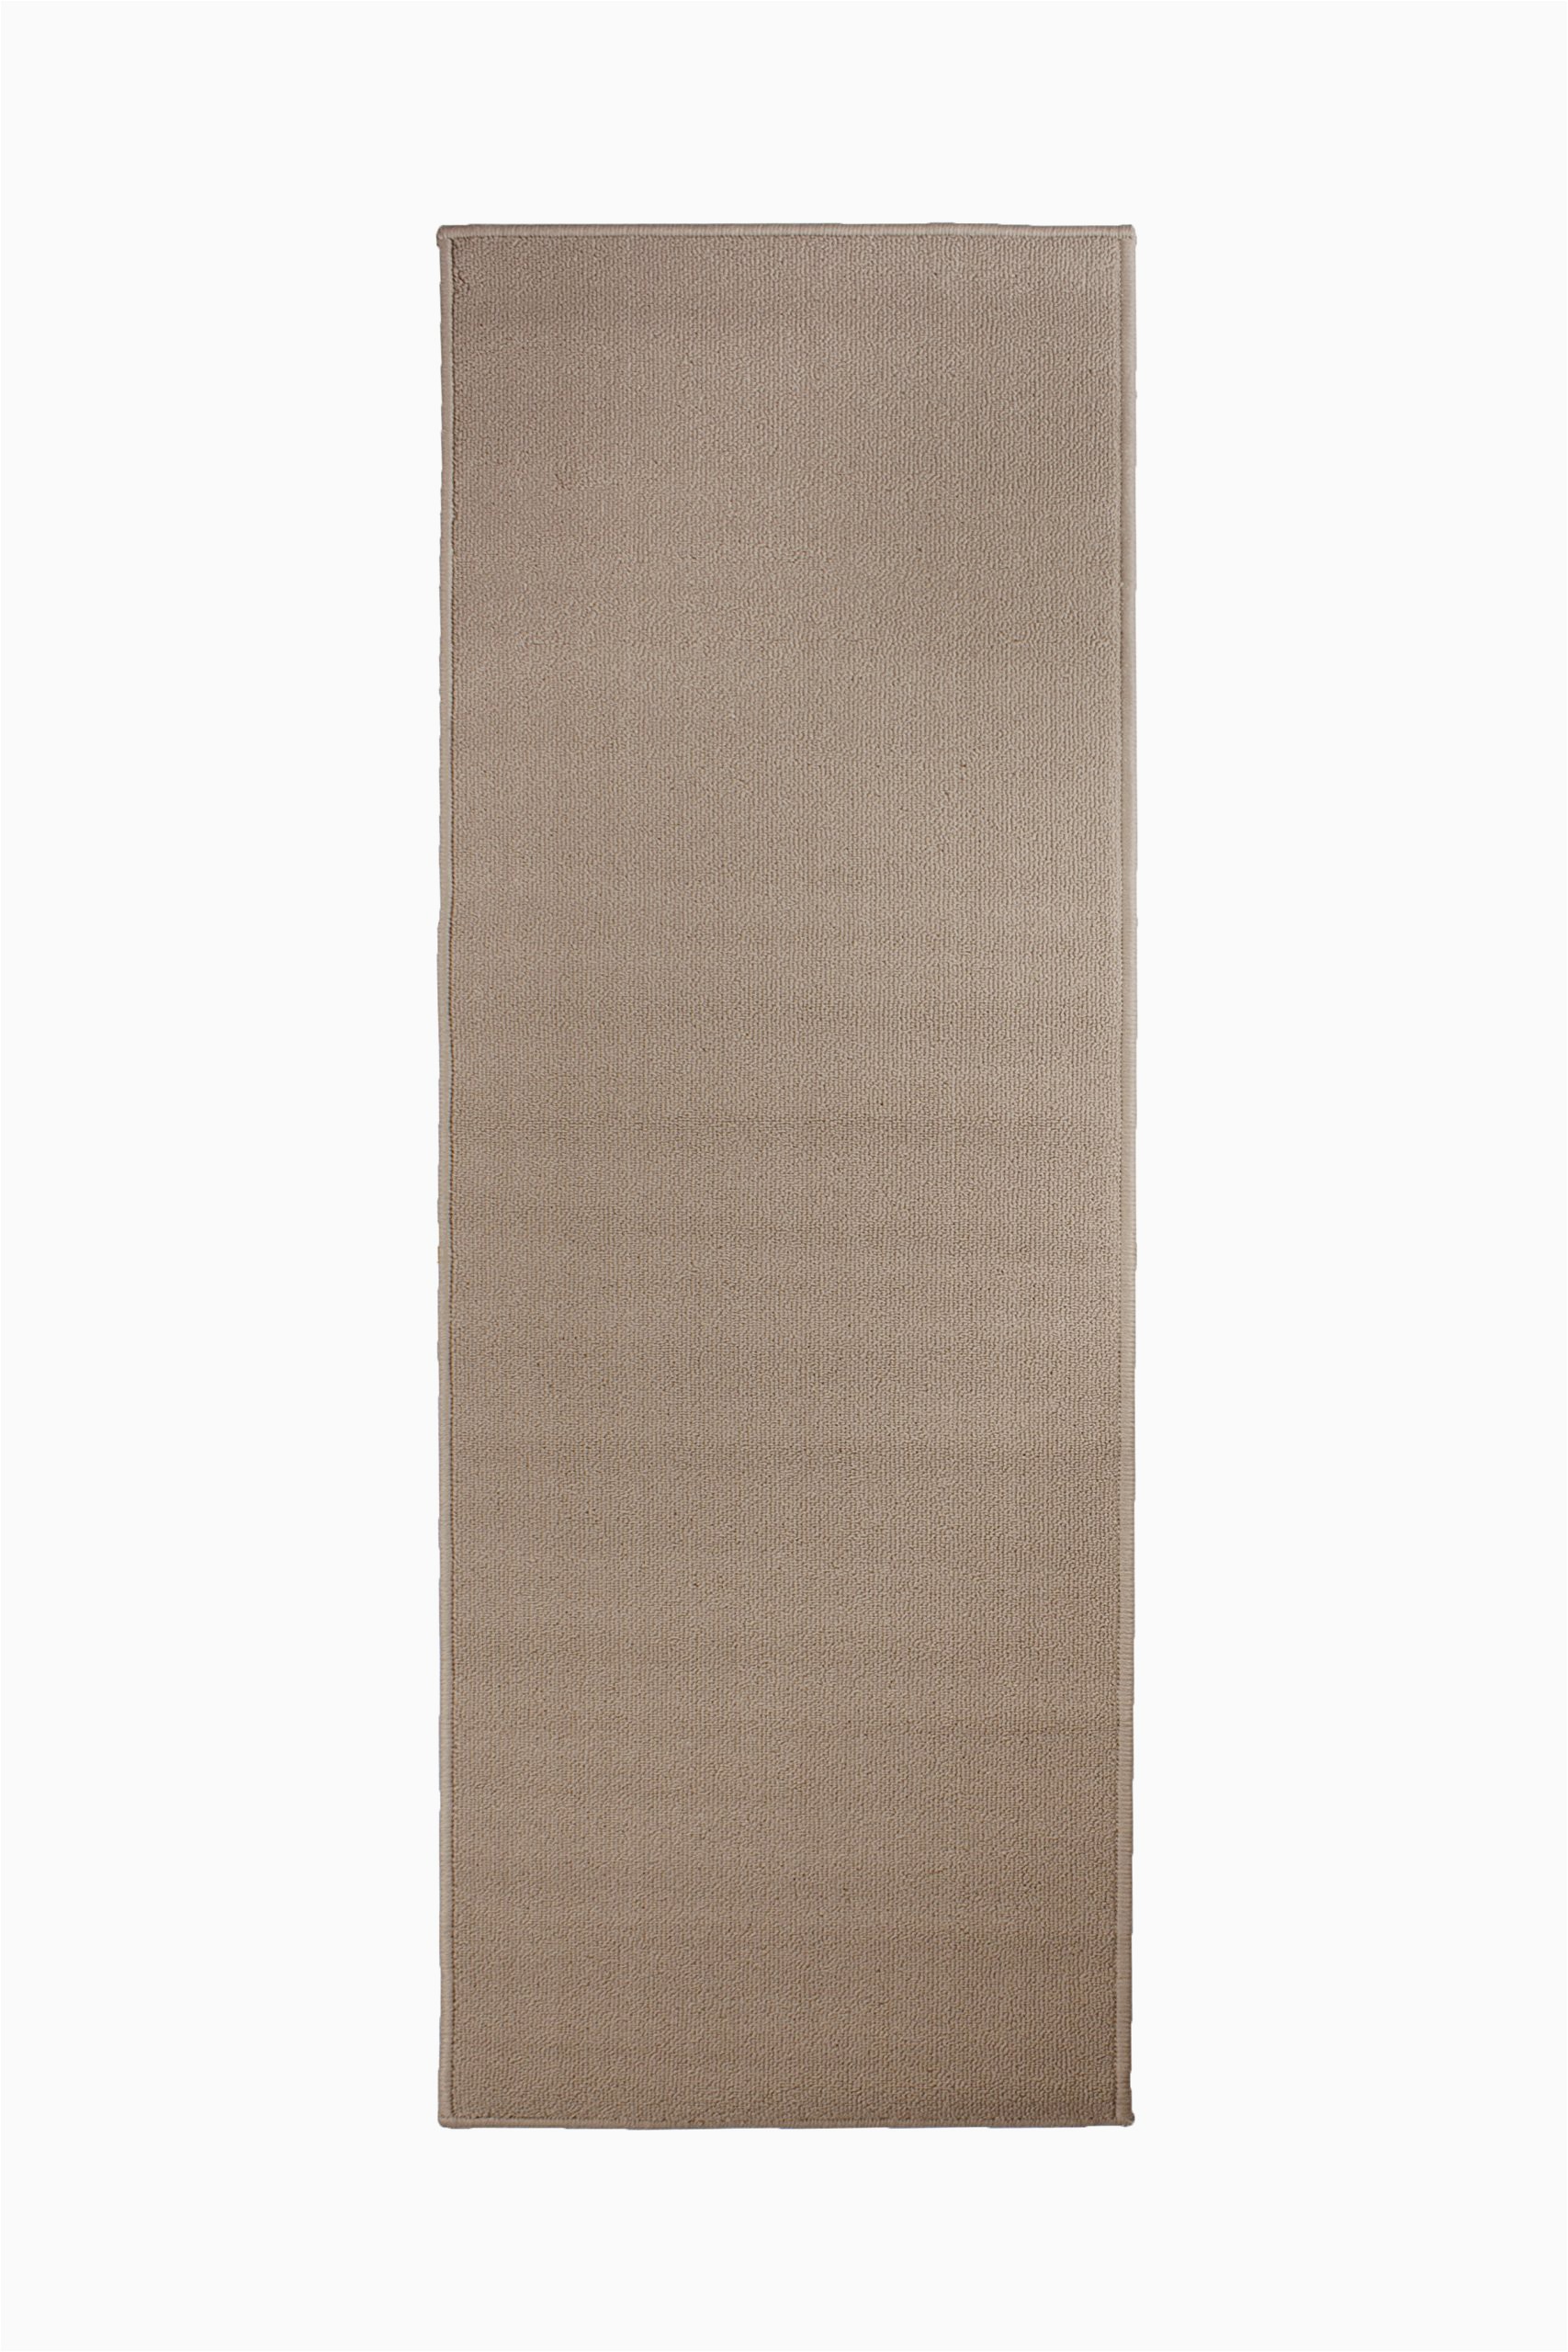 ritz accent door rug runner with non slip latex backing 20 inch by 60 inch kitchen bathroom runner rug beige